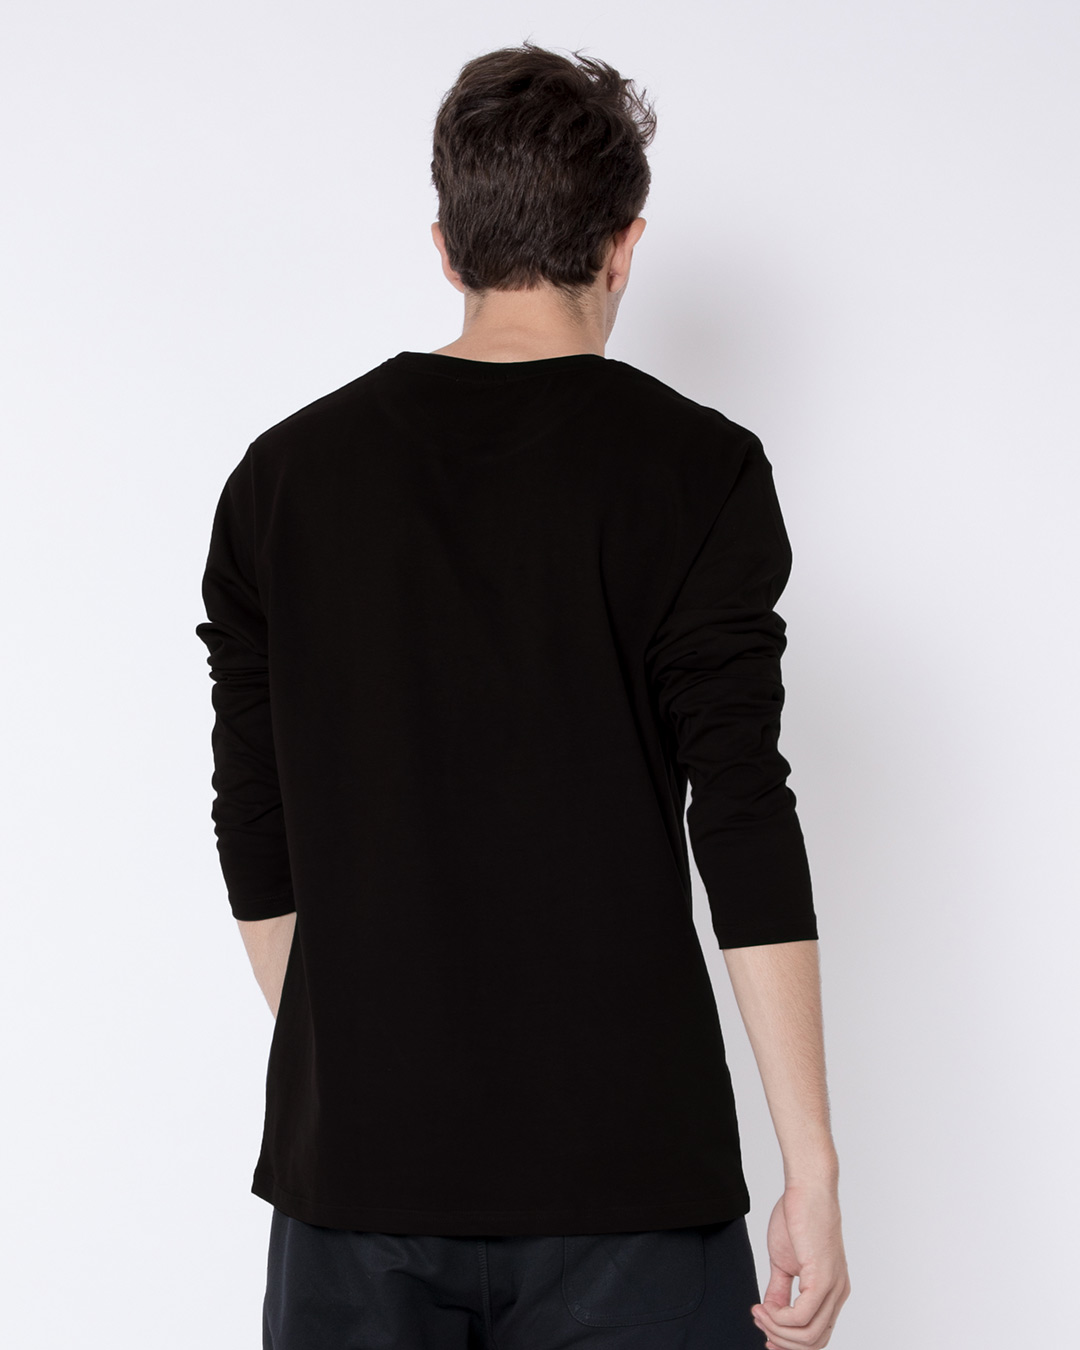 Shop Black Mask Glow In Dark Full Sleeve T-Shirt (AVL) -Back